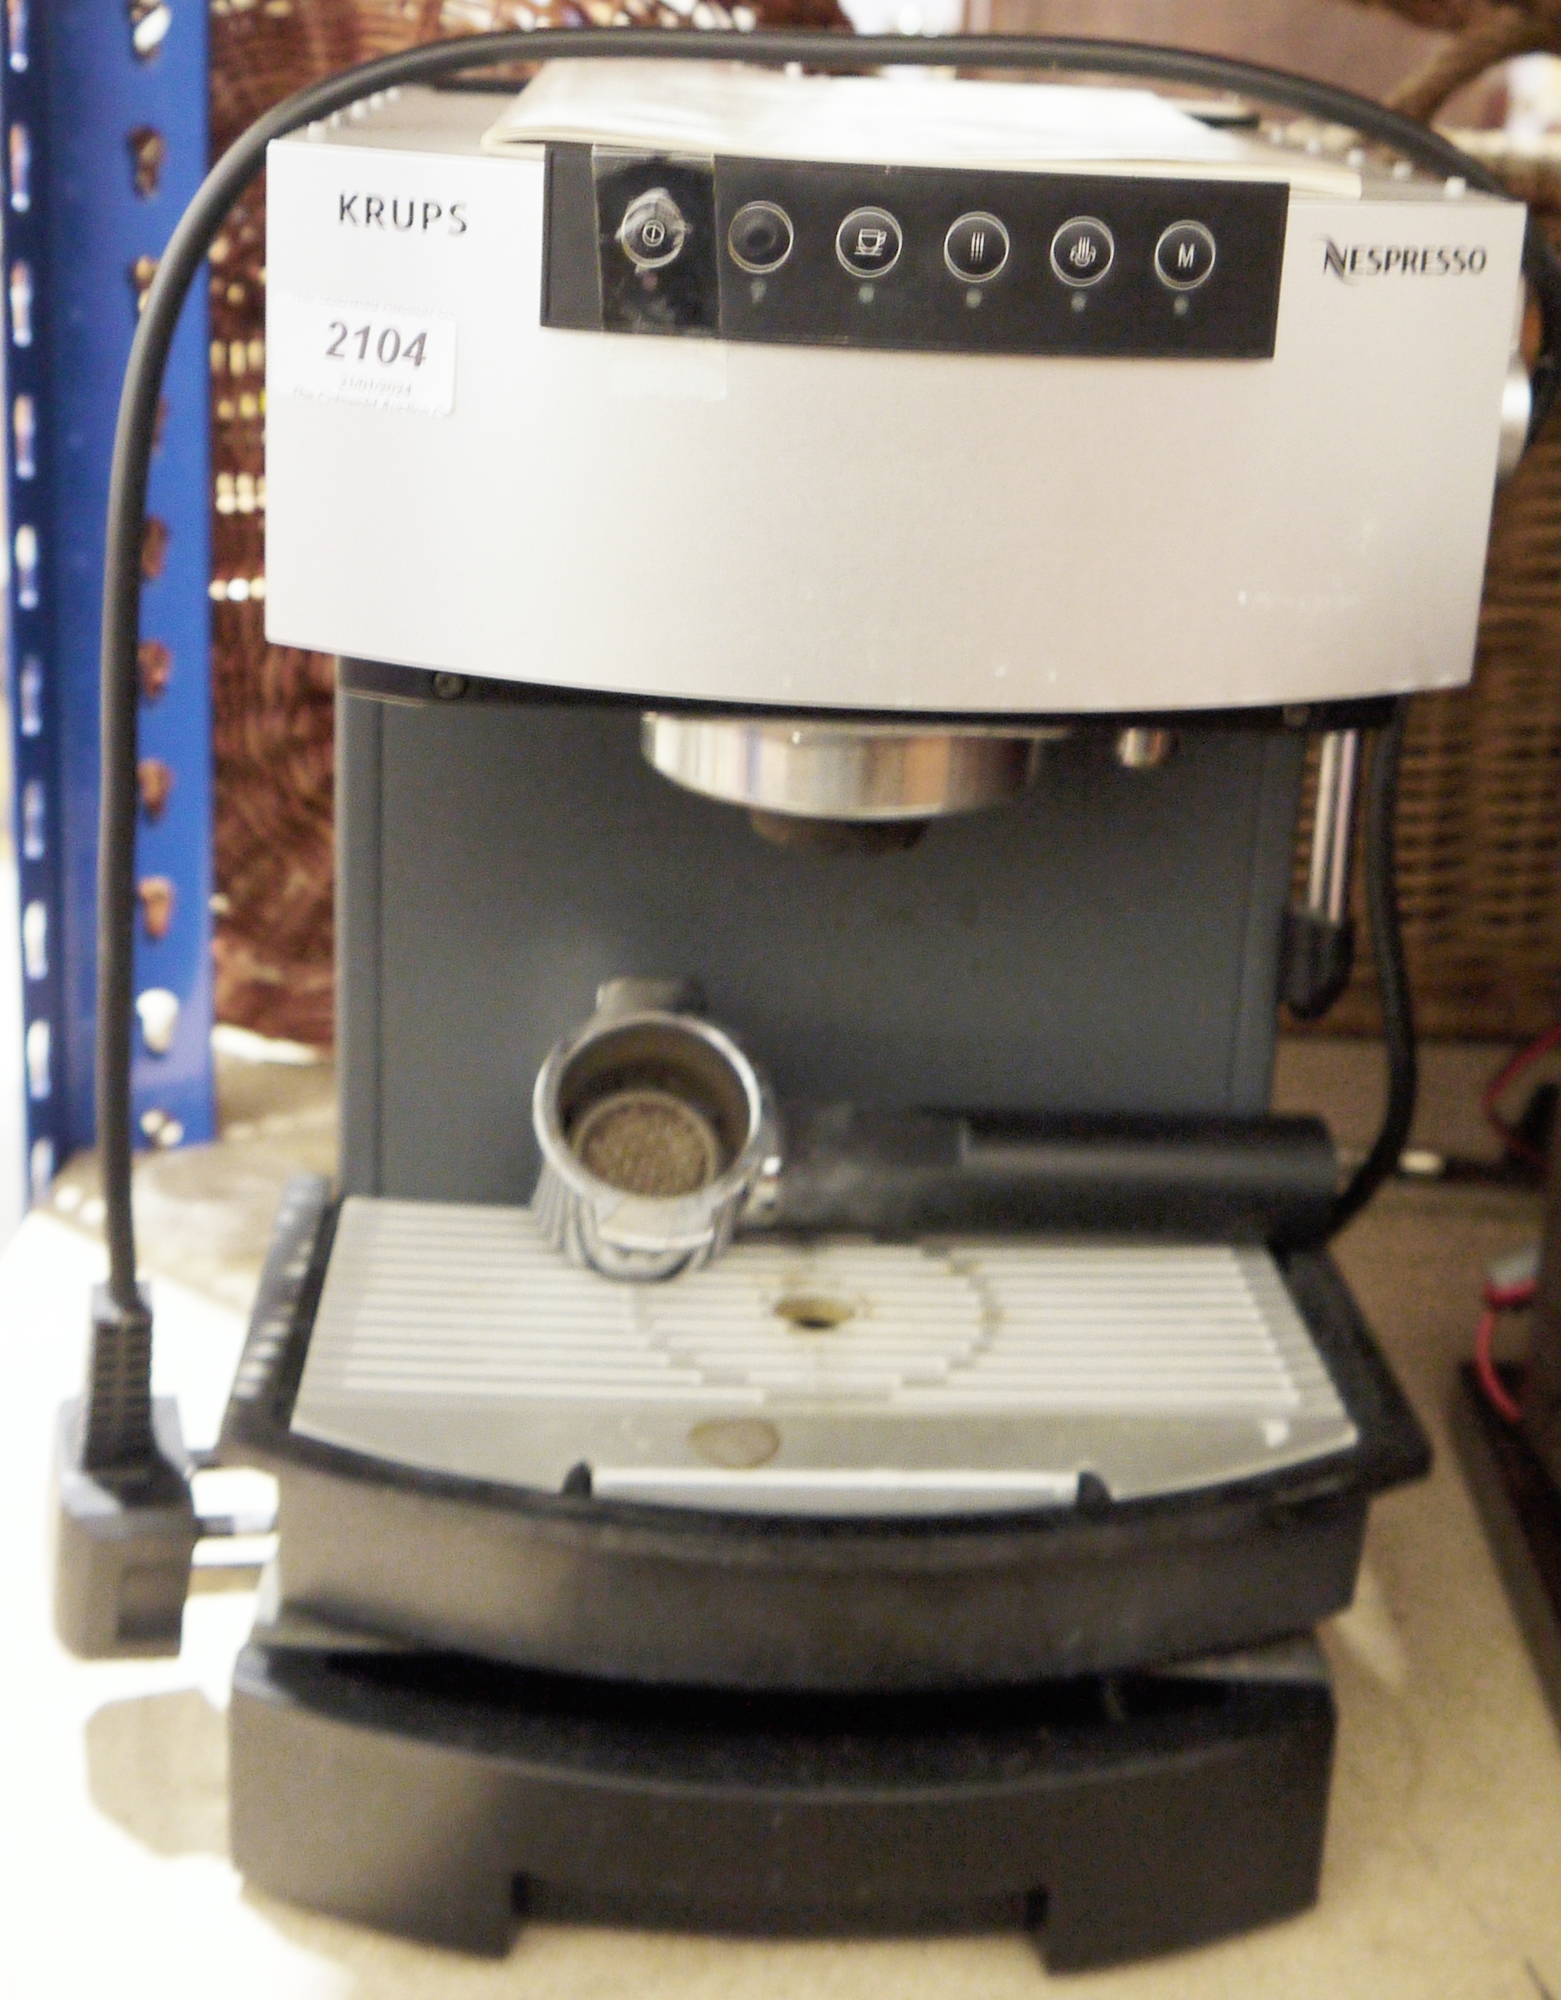 Krups Nespresso coffee machine with instructions